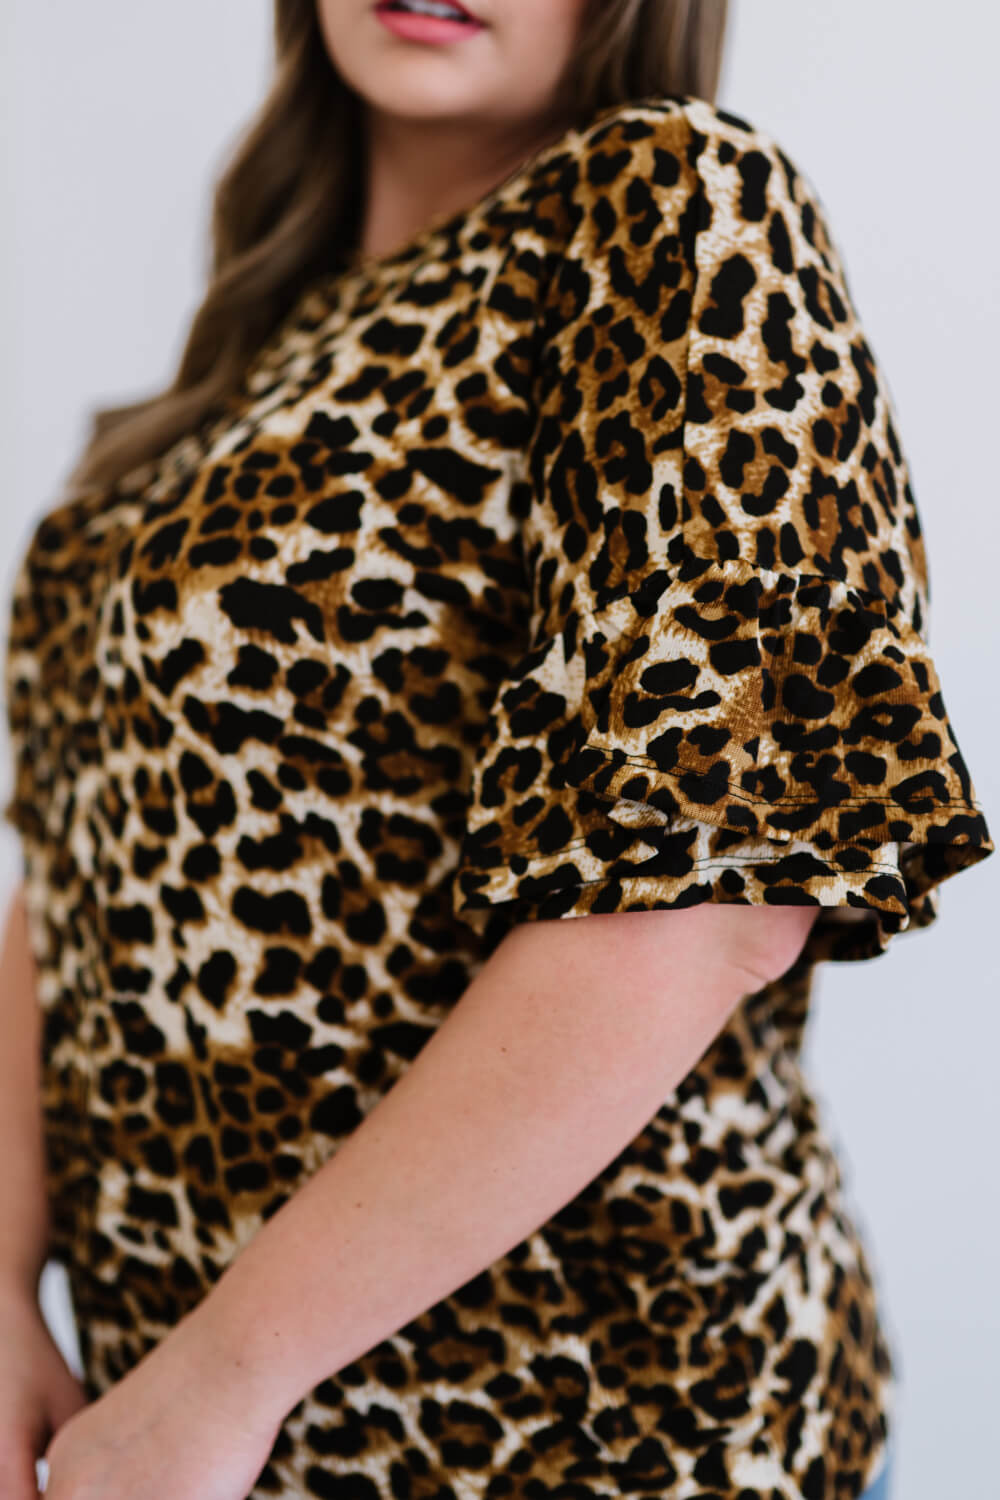 Lookin' Fabulous Full Size Run Leopard Print Tee